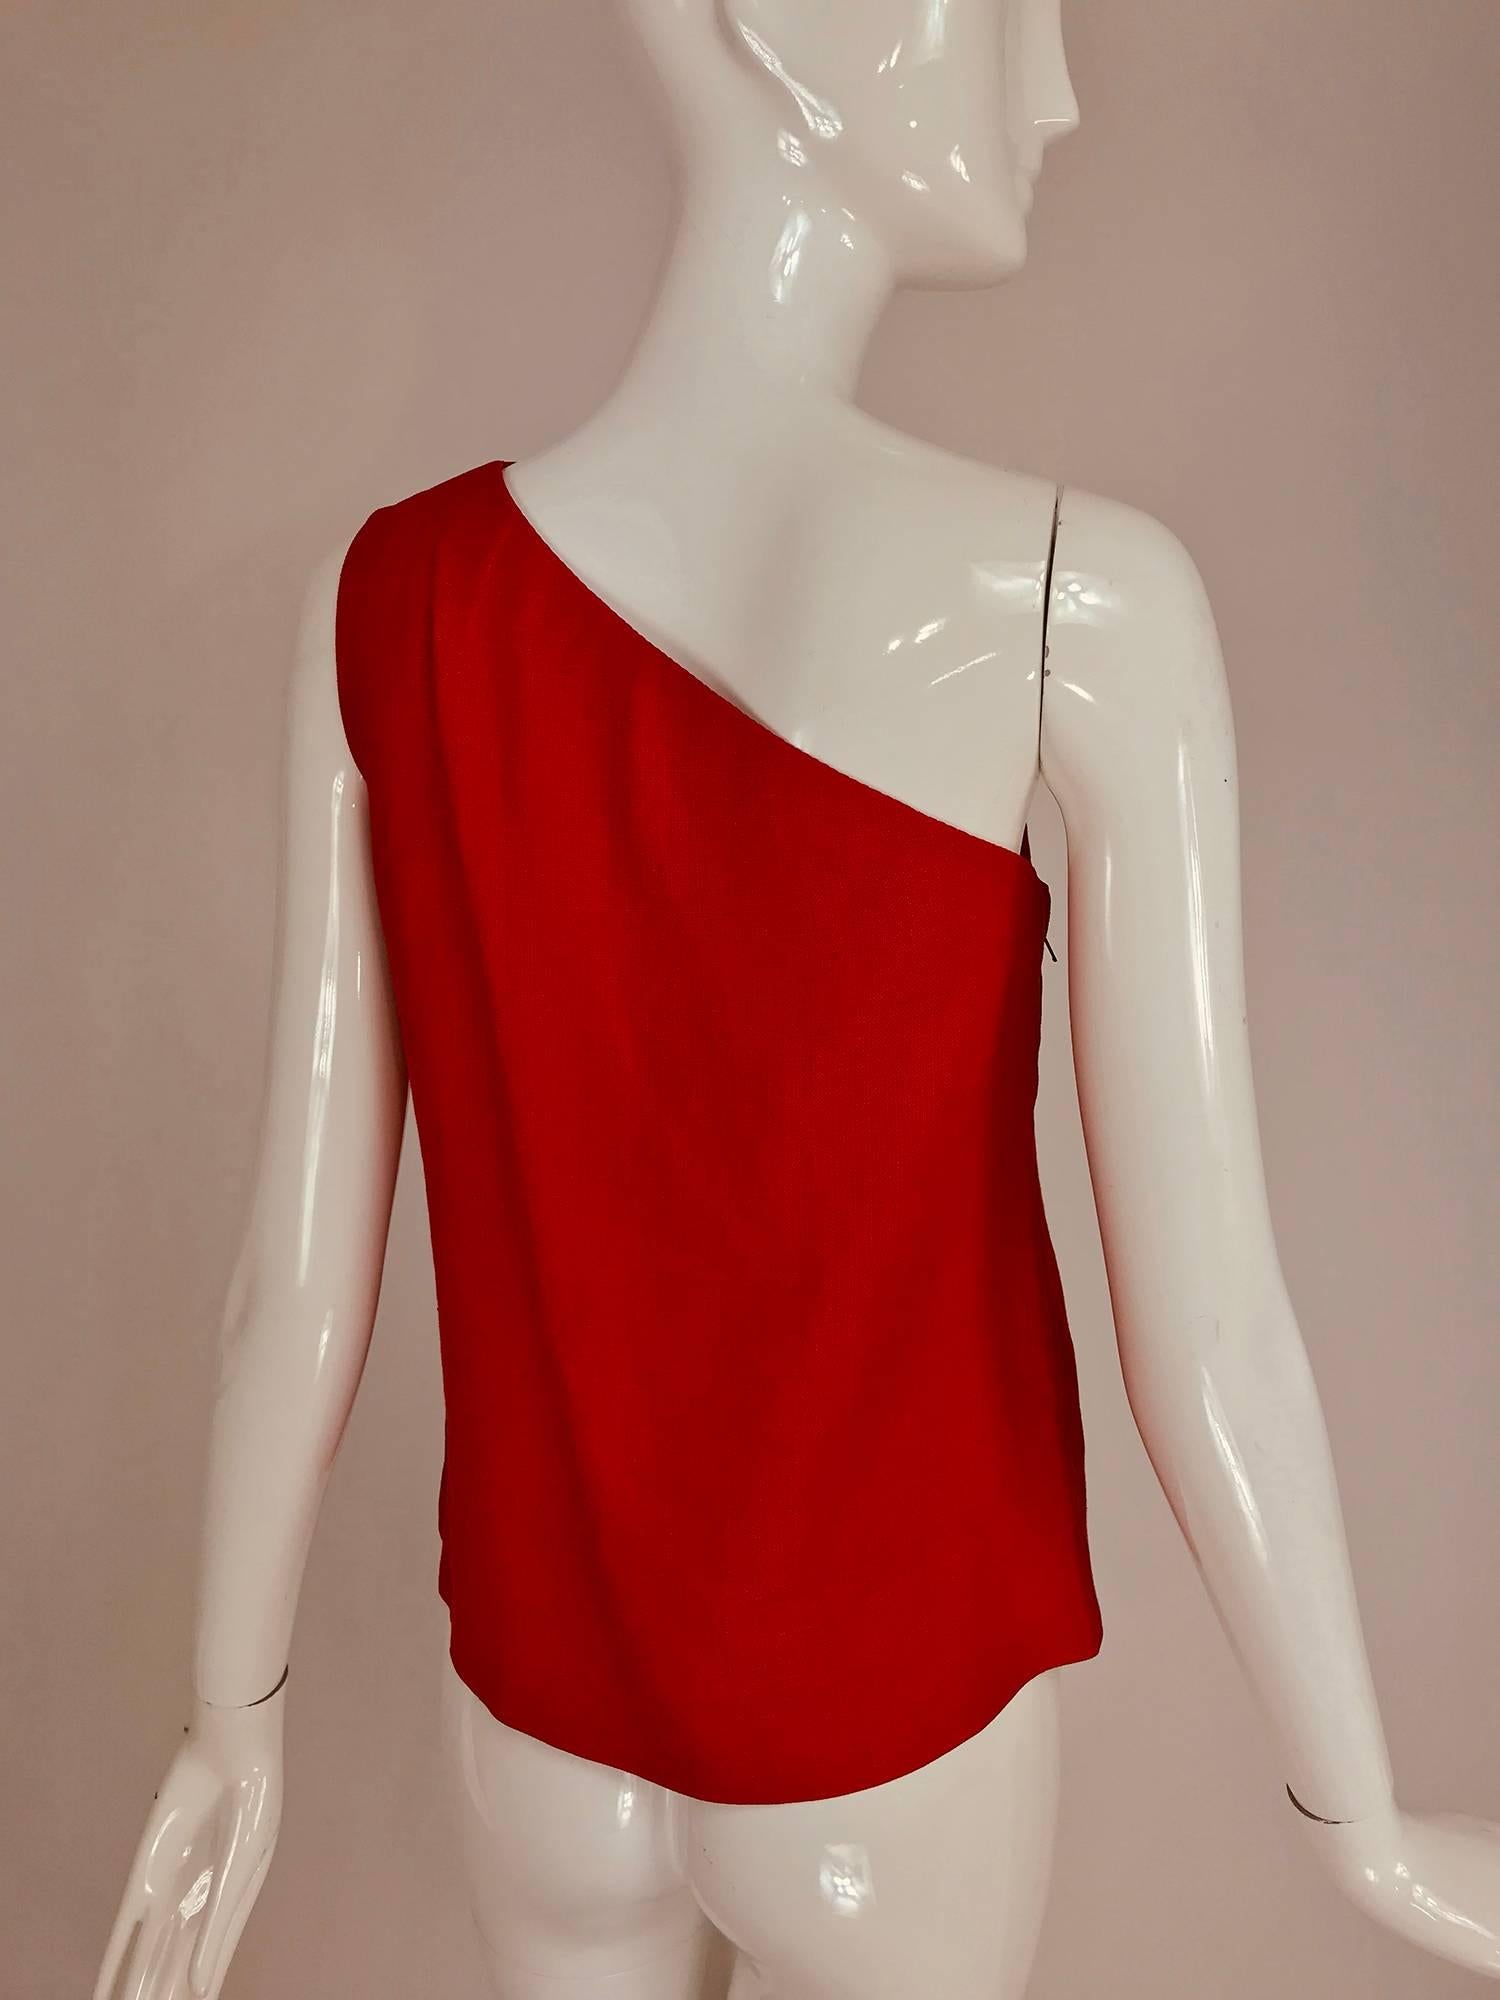 Women's Bill Blass red linen one shoulder top 1970s